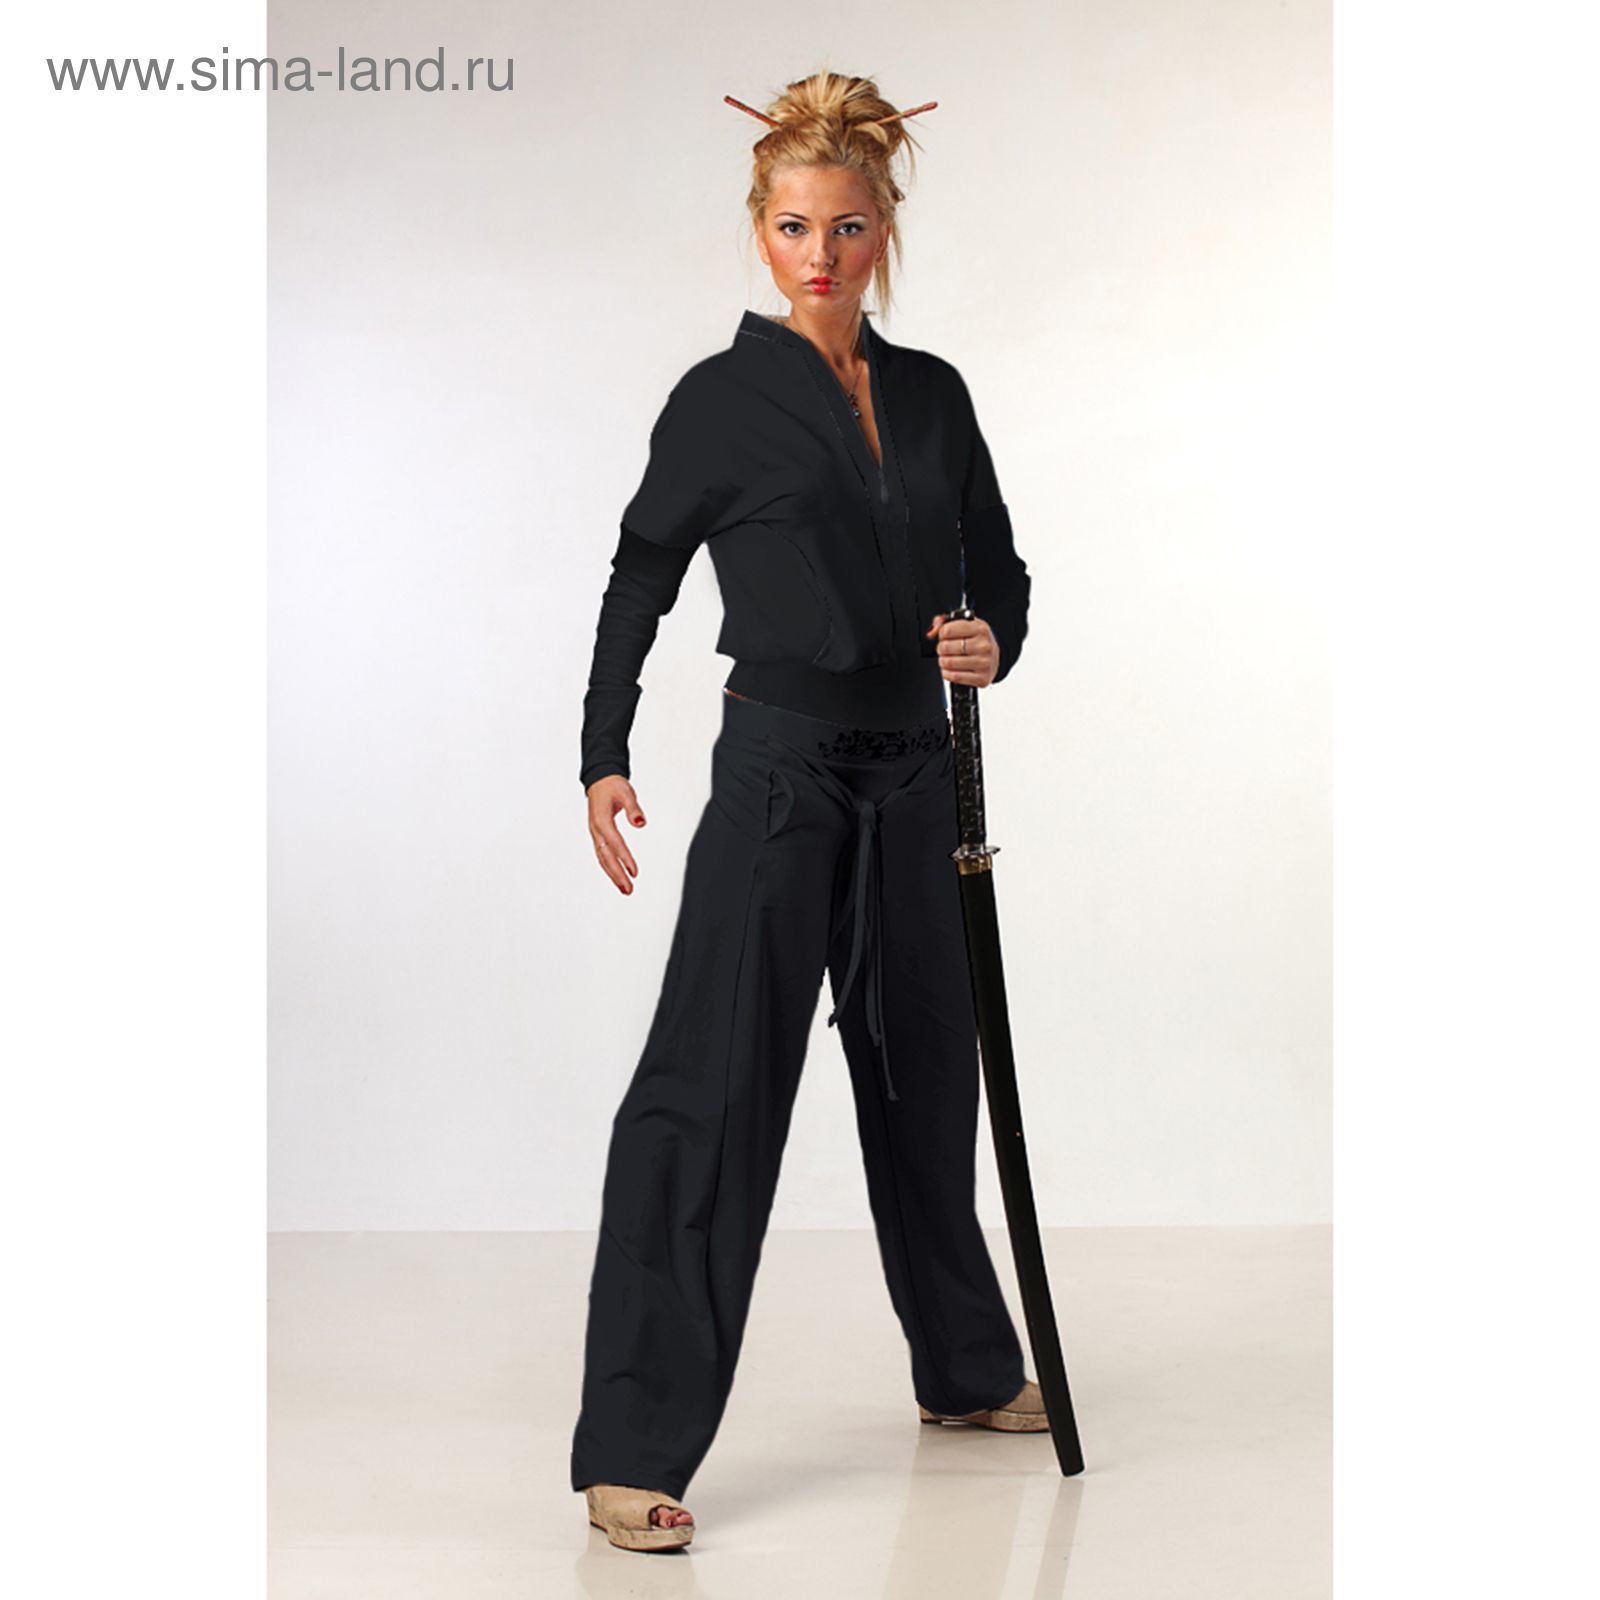 Комплект женский (куртка, брюки) М-531-05, р-р 44